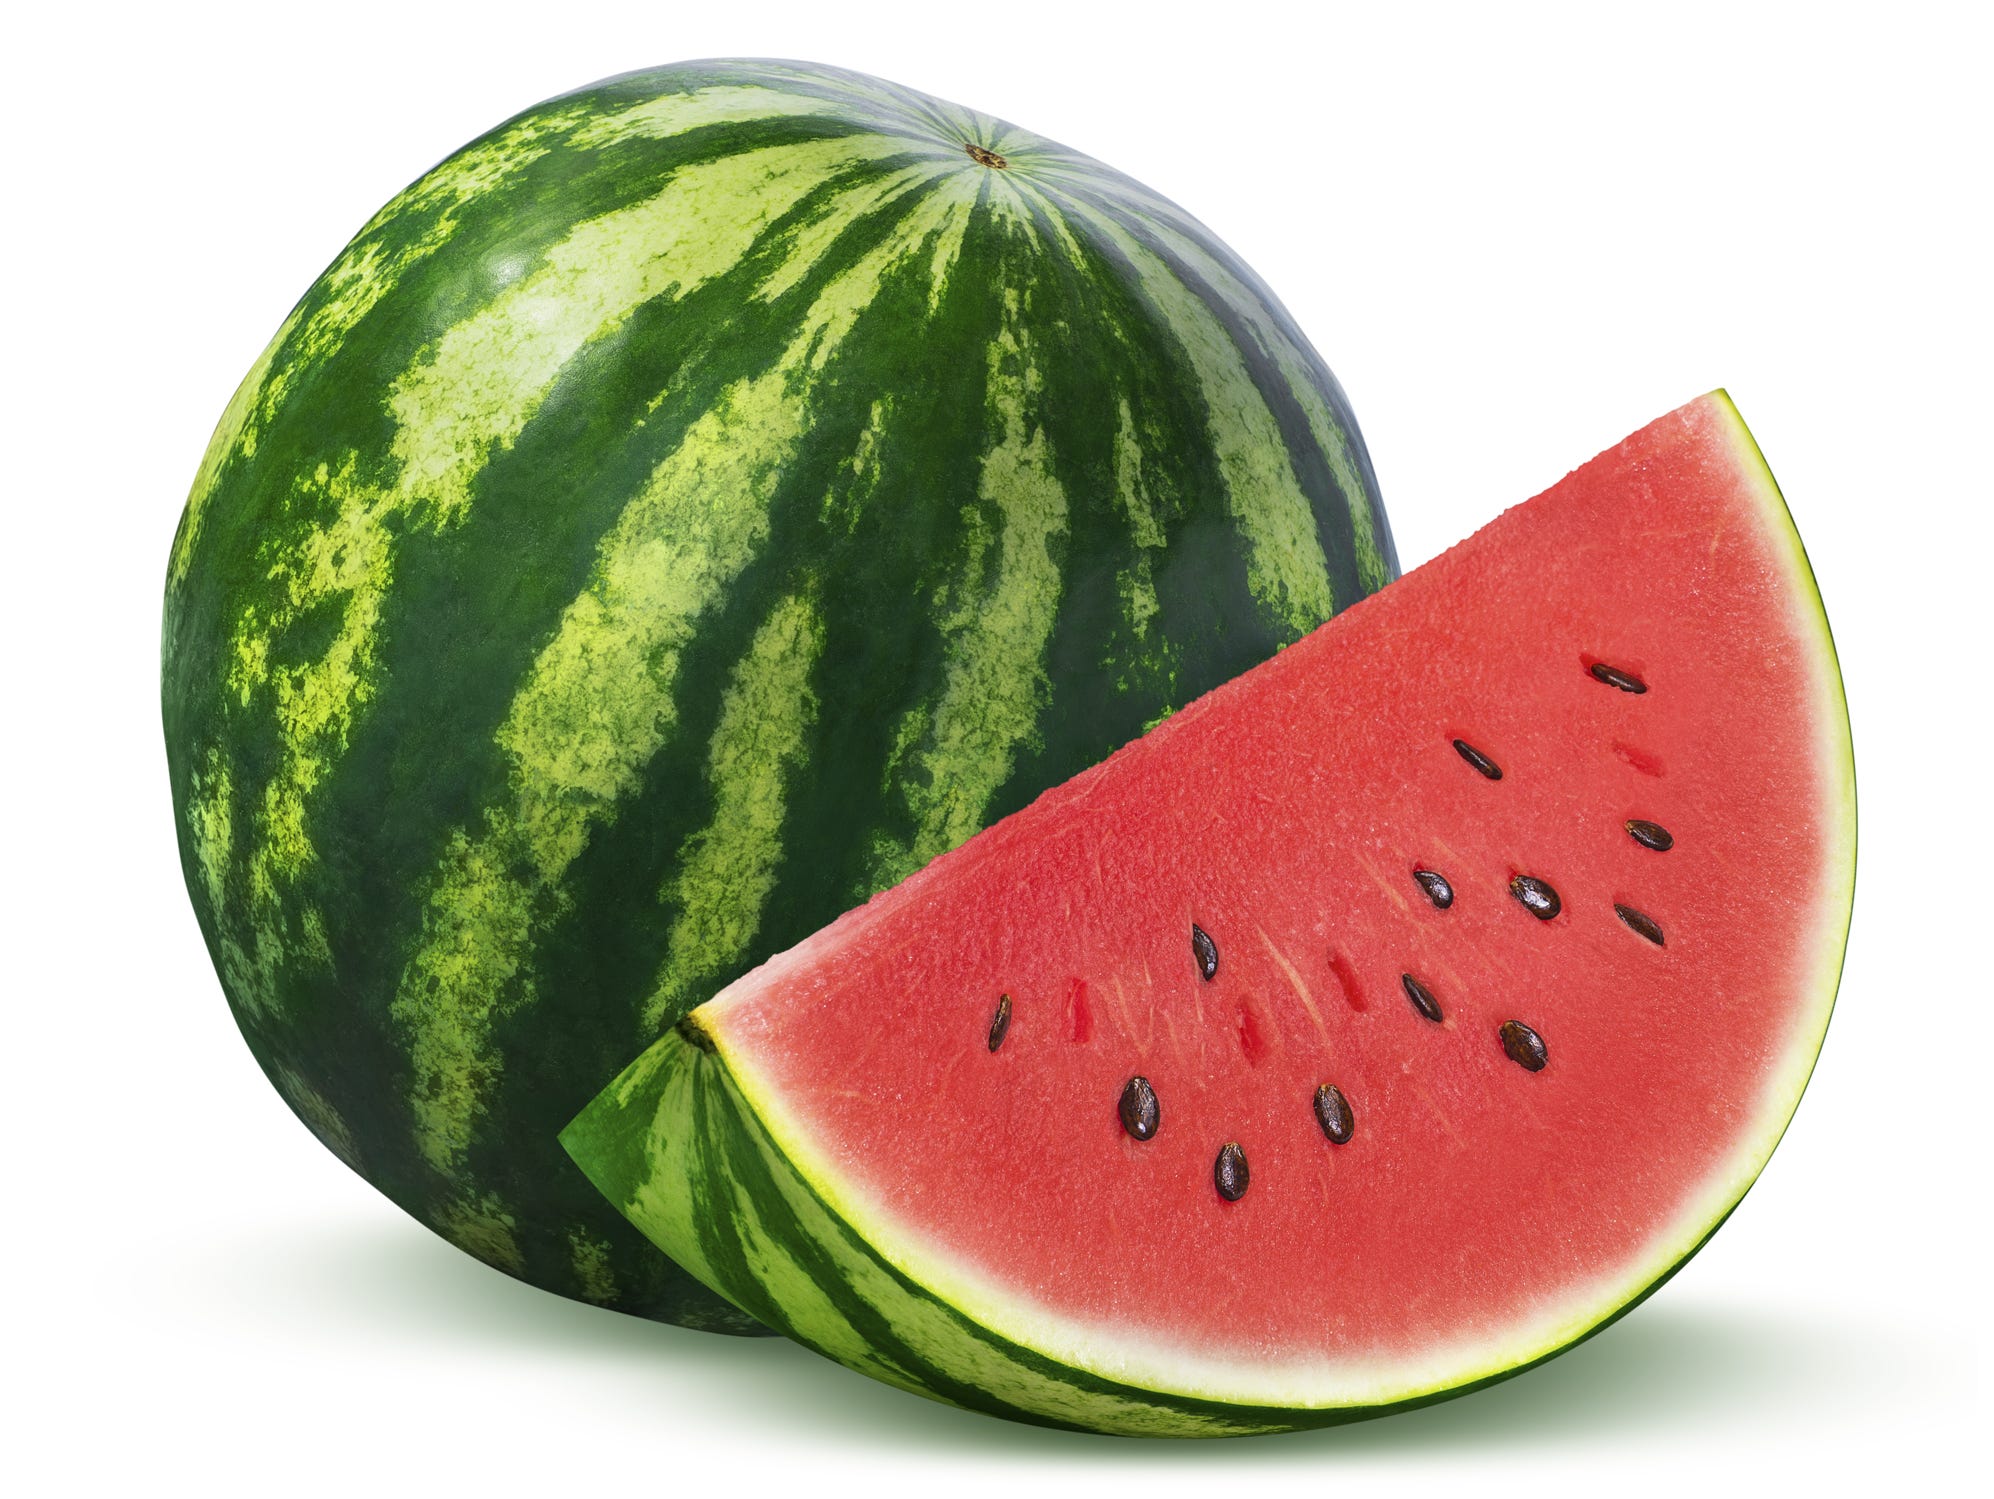 michigan health alert: throw away pre-cut melon